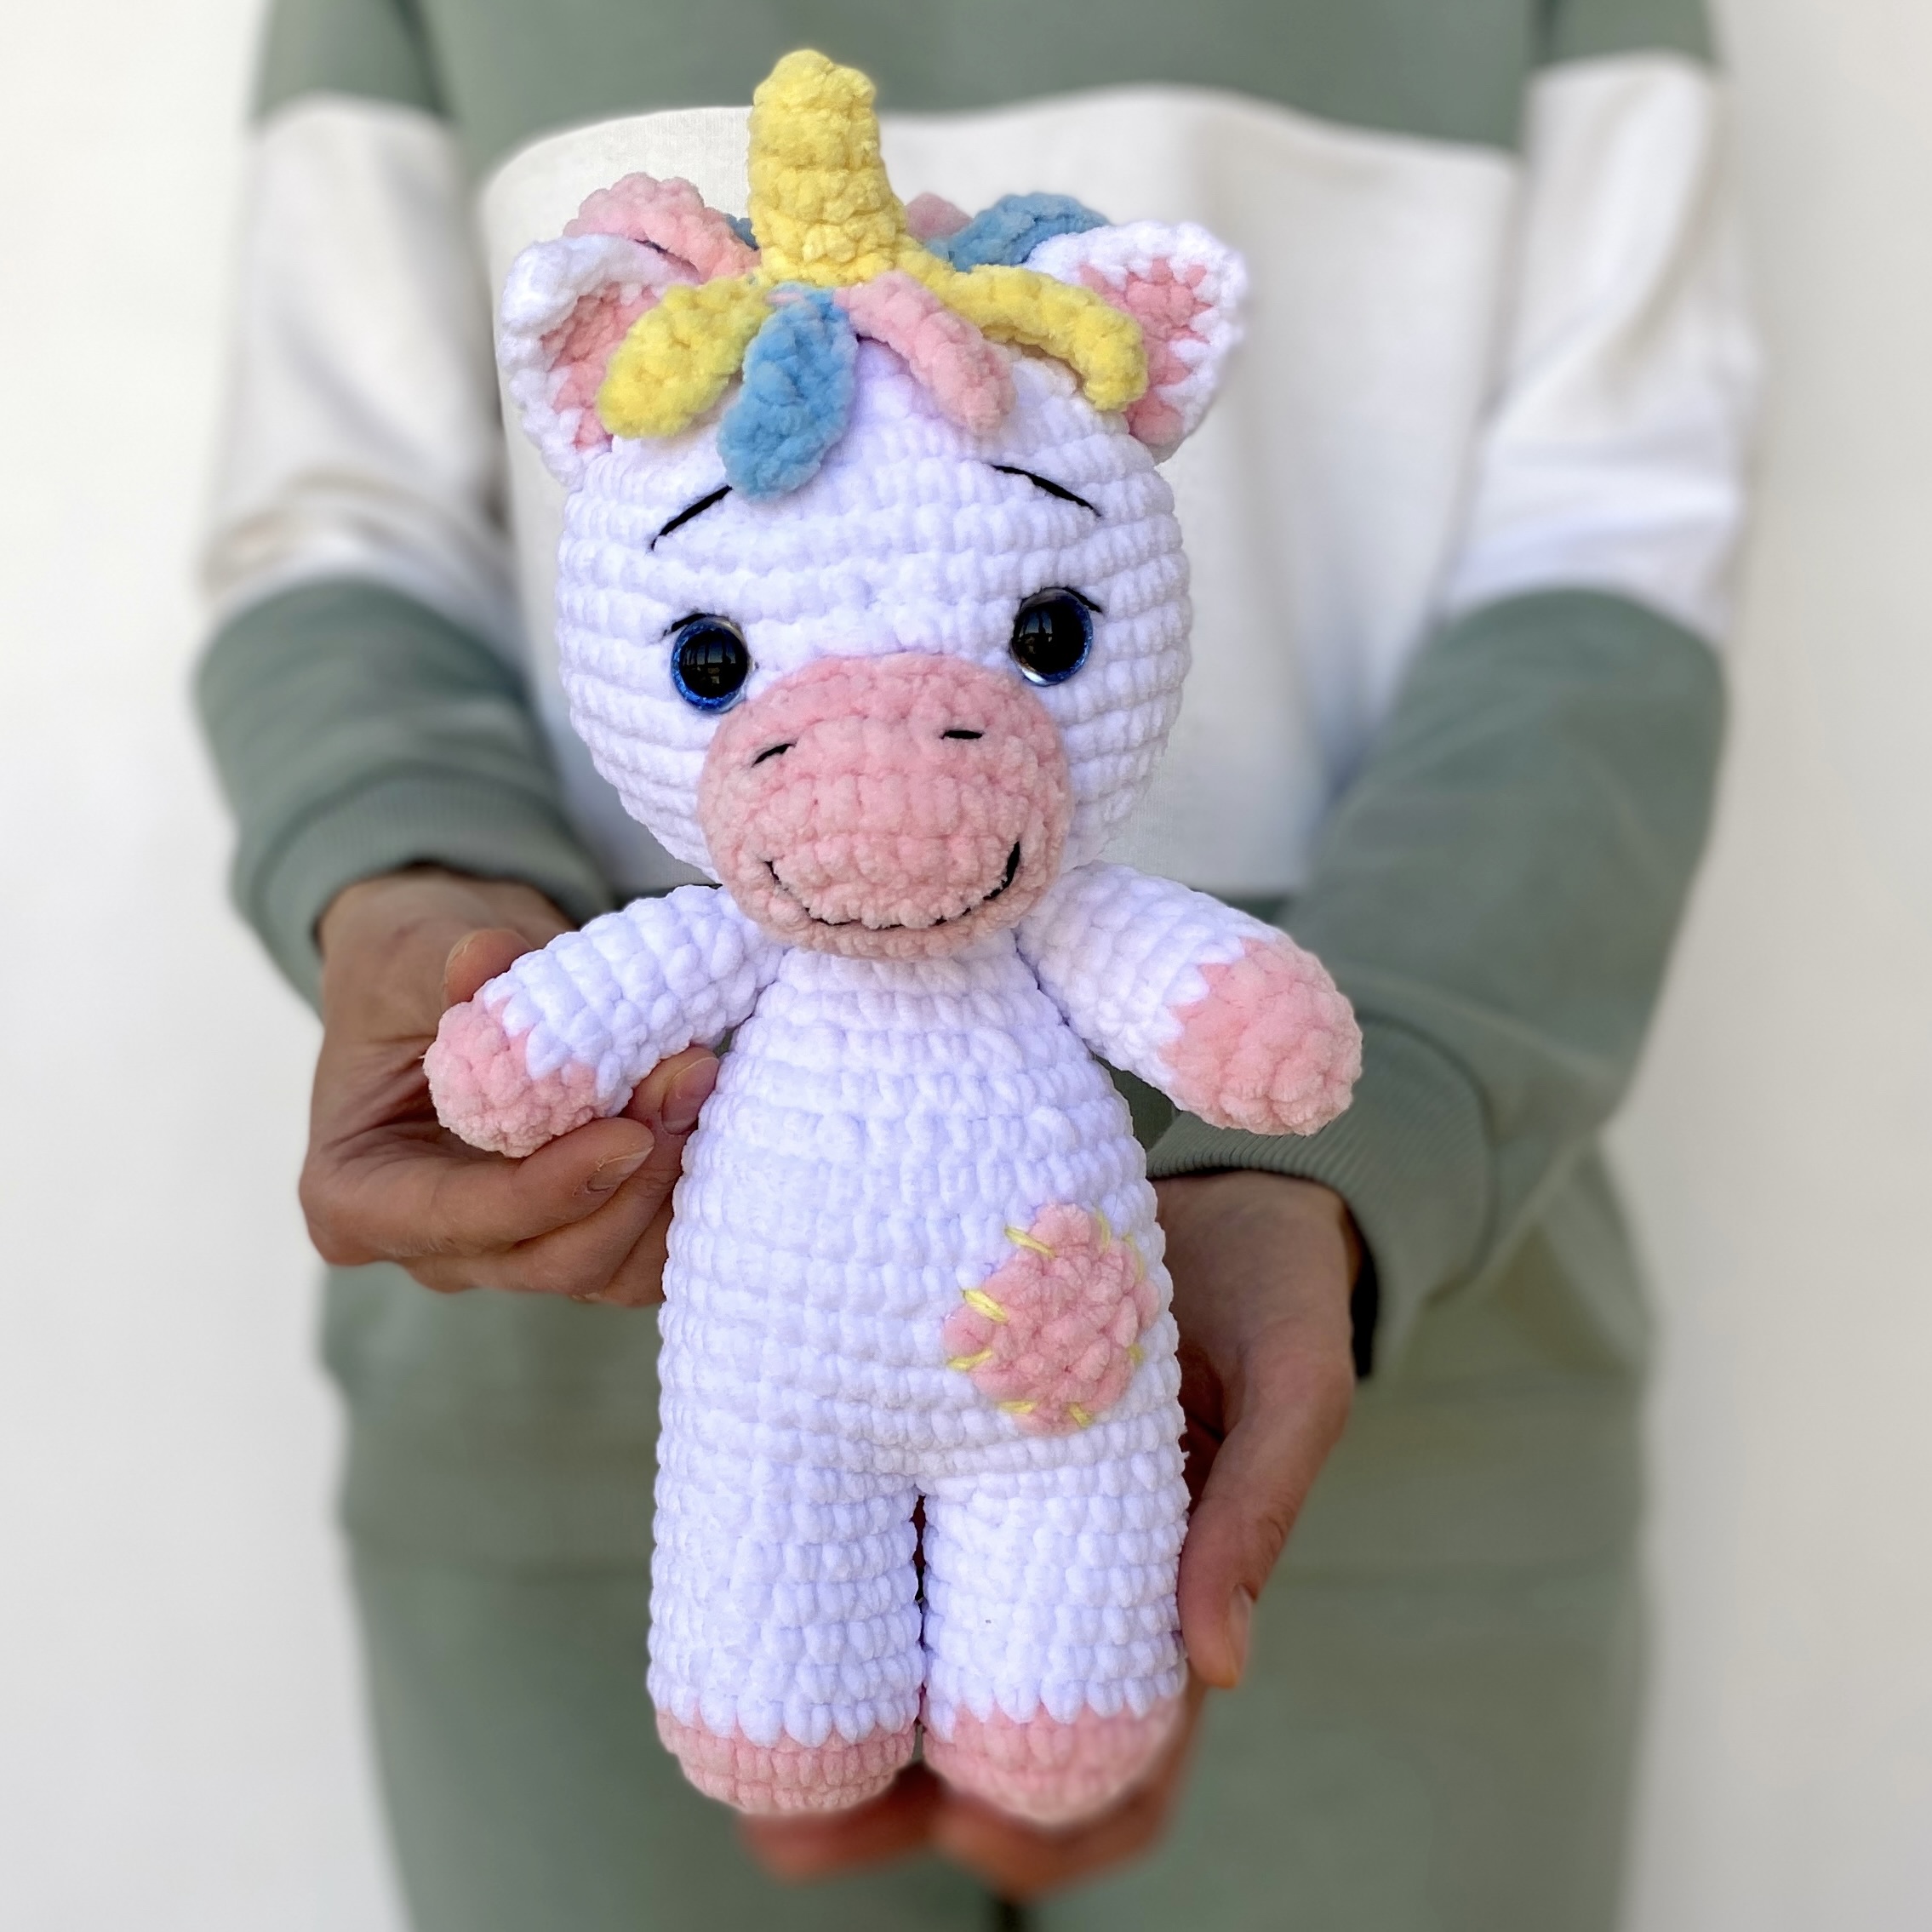 Unicorn plush amigurumi Crochet pattern by Creations by Jamie M